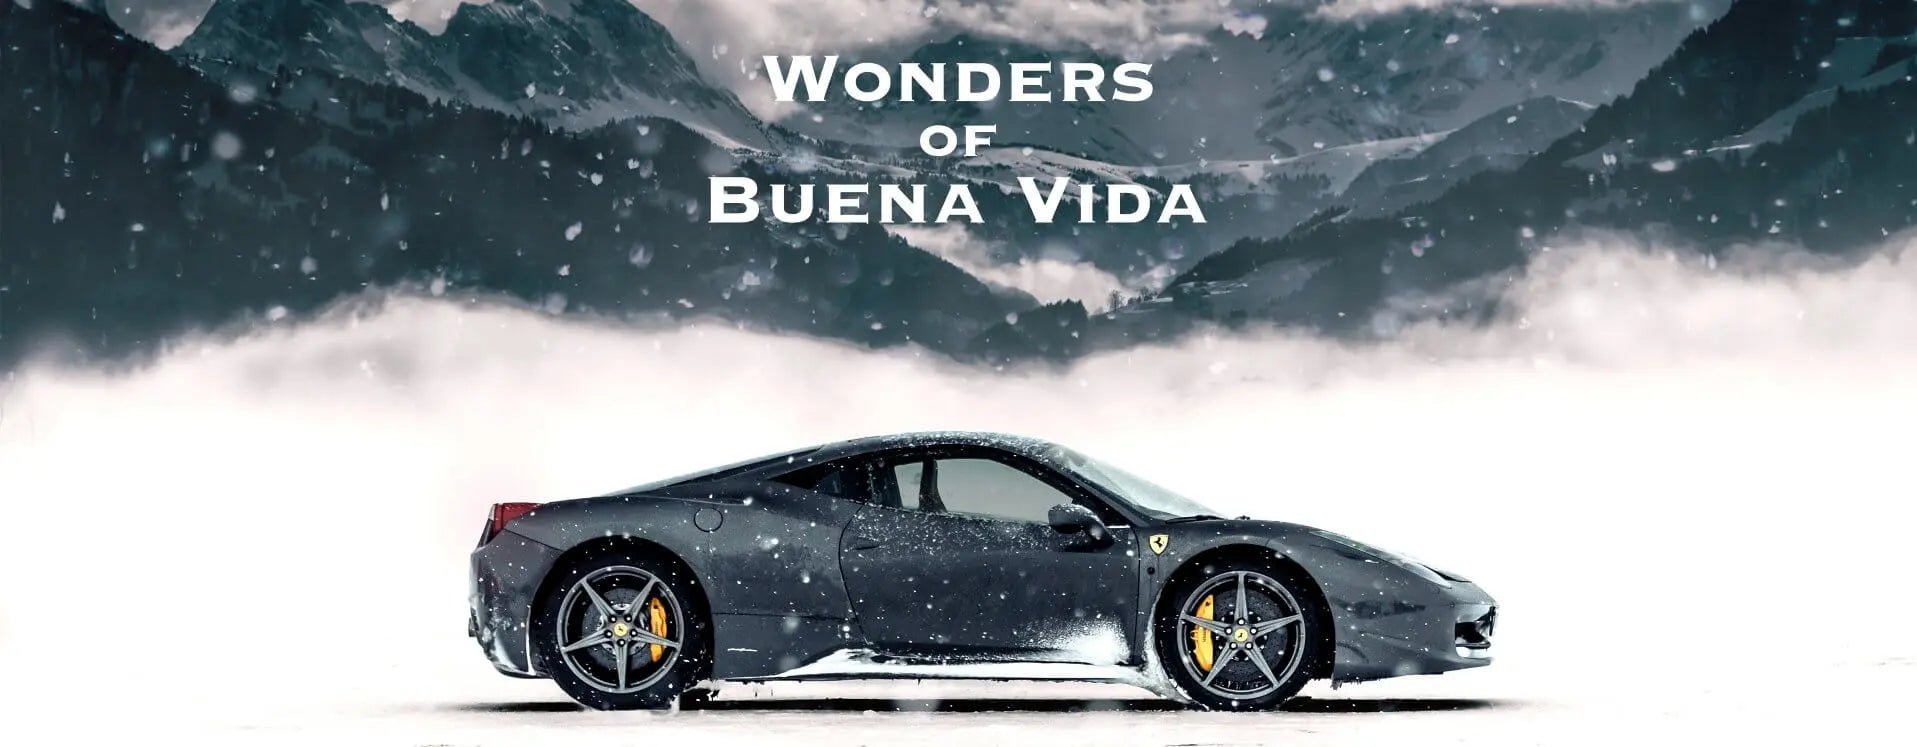 Wonders of Buena Vida